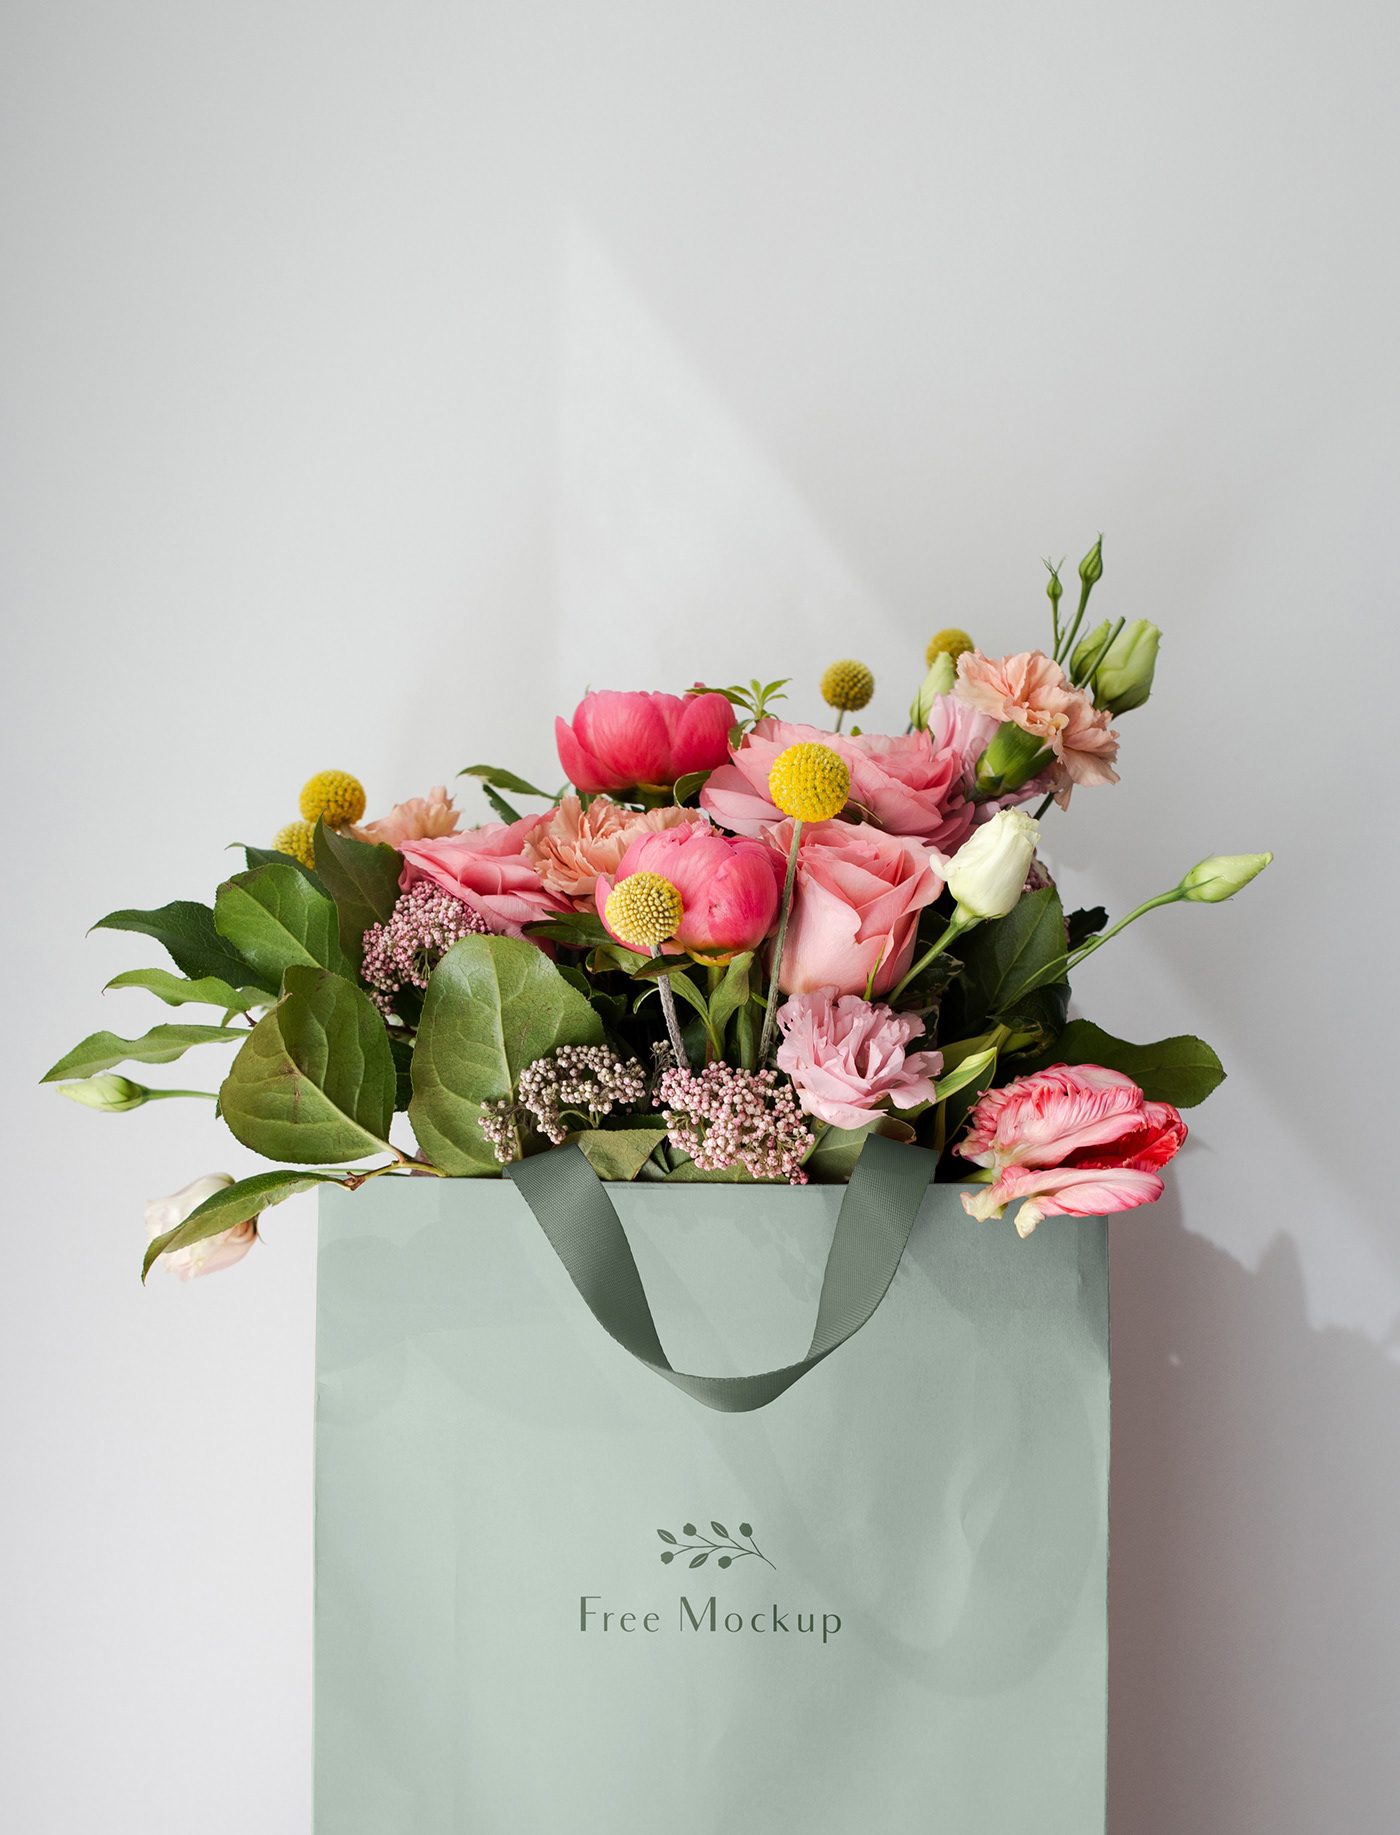 flowers bag